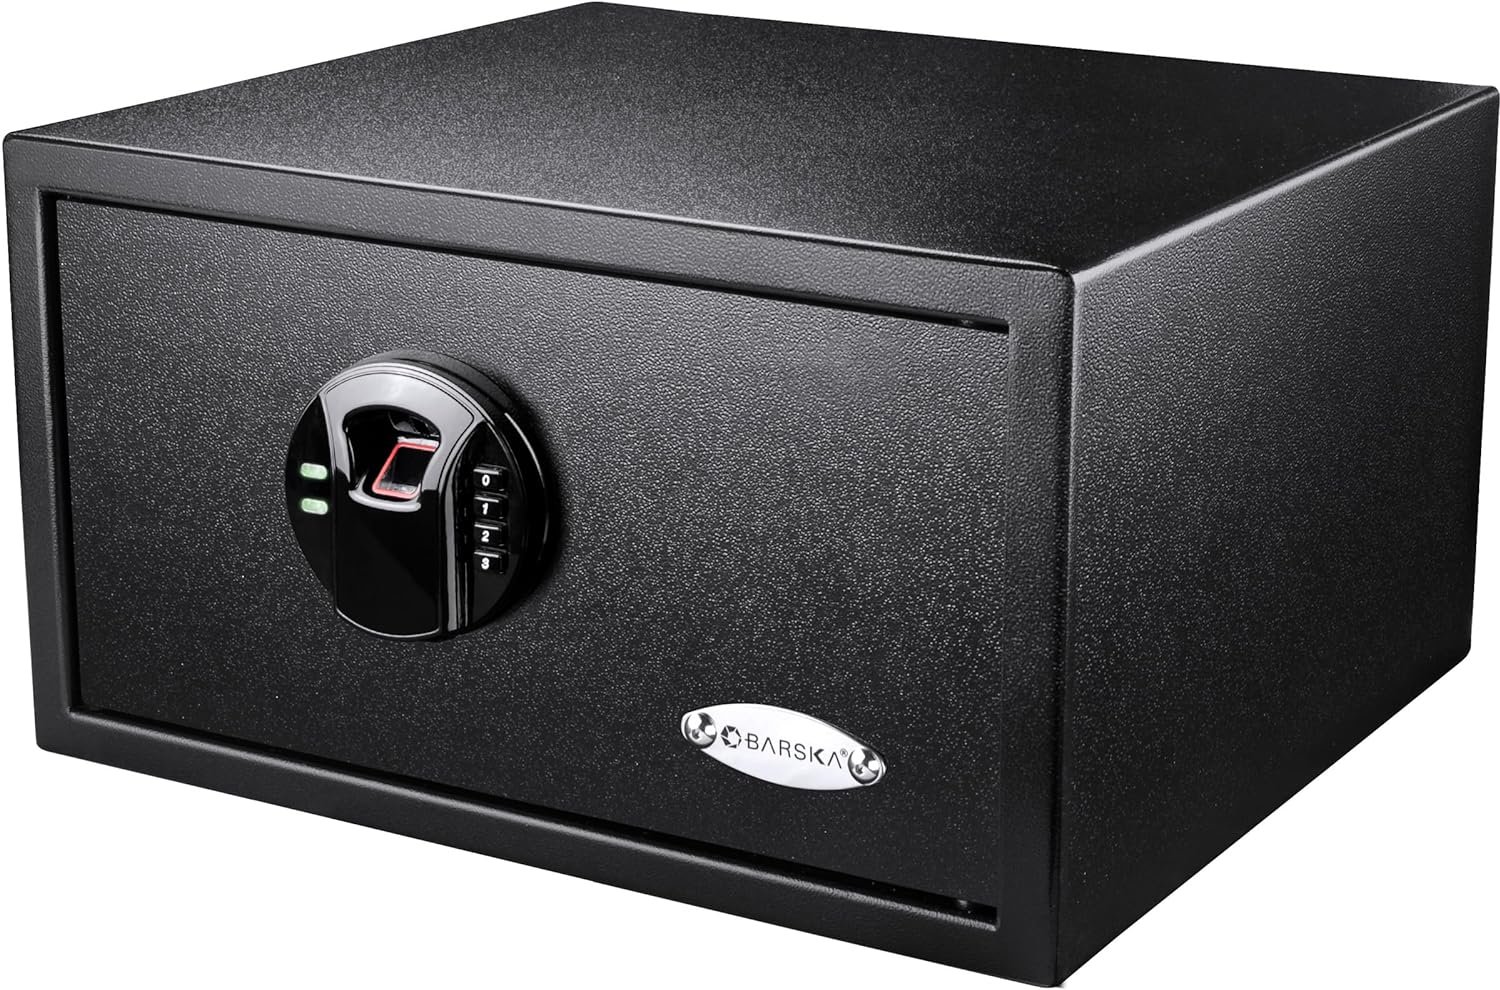 Barska AX12840 Biometric Fingerprint Keypad Security Home Safe 0.99 Cubic Ft, Black Review